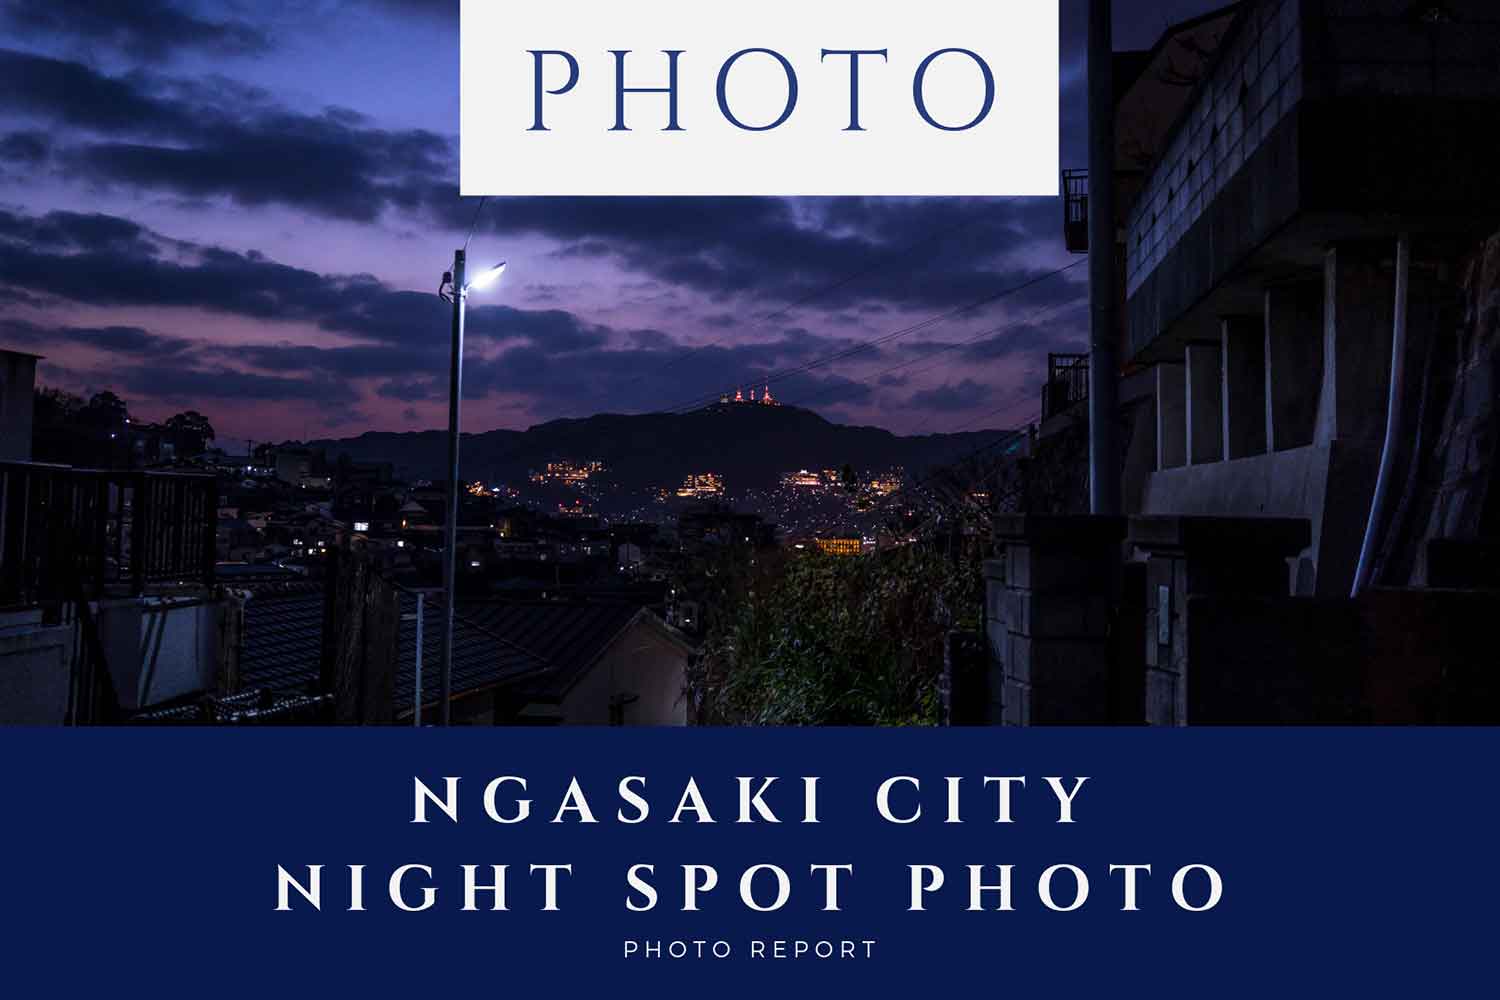 nagasaki-photo-nightp-spot